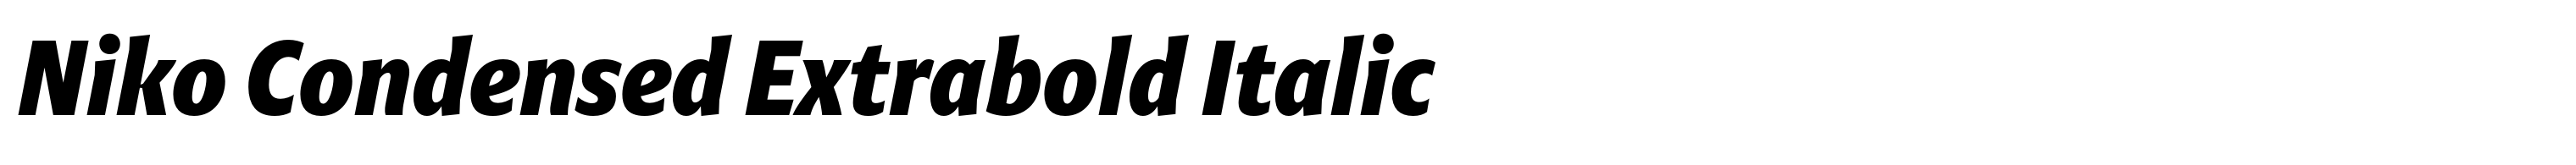 Niko Condensed Extrabold Italic